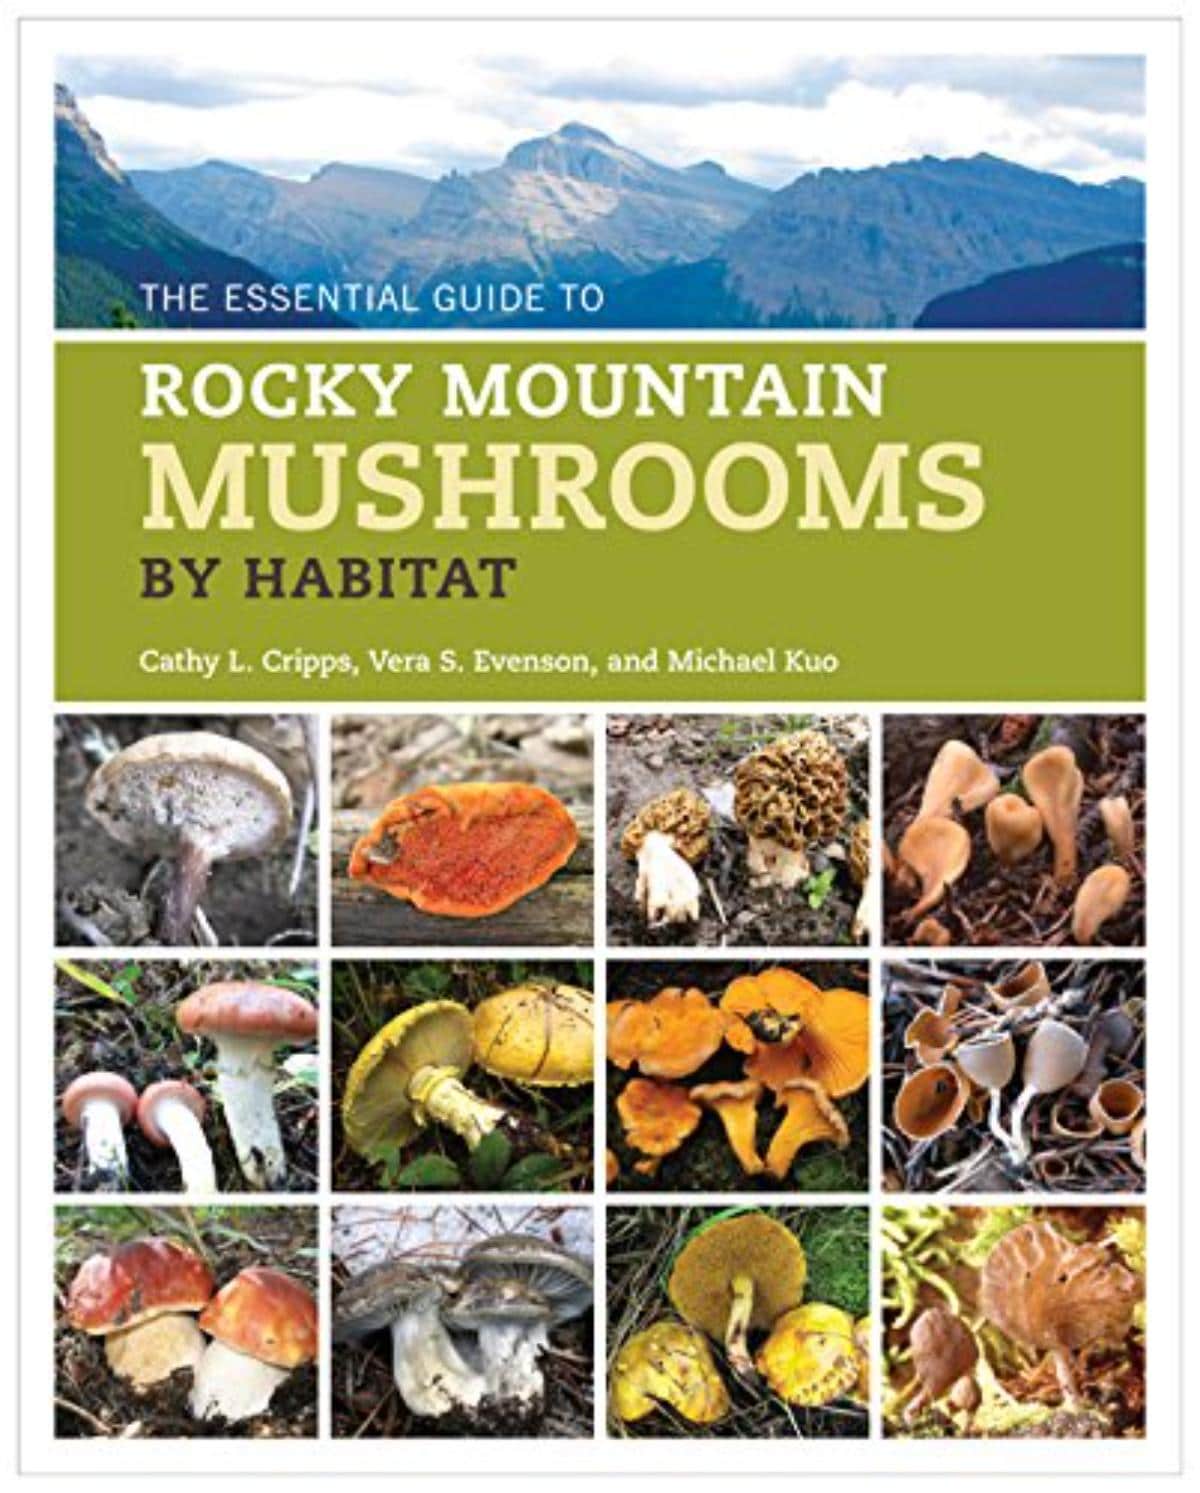 rocky mountain mushrooms identification books
